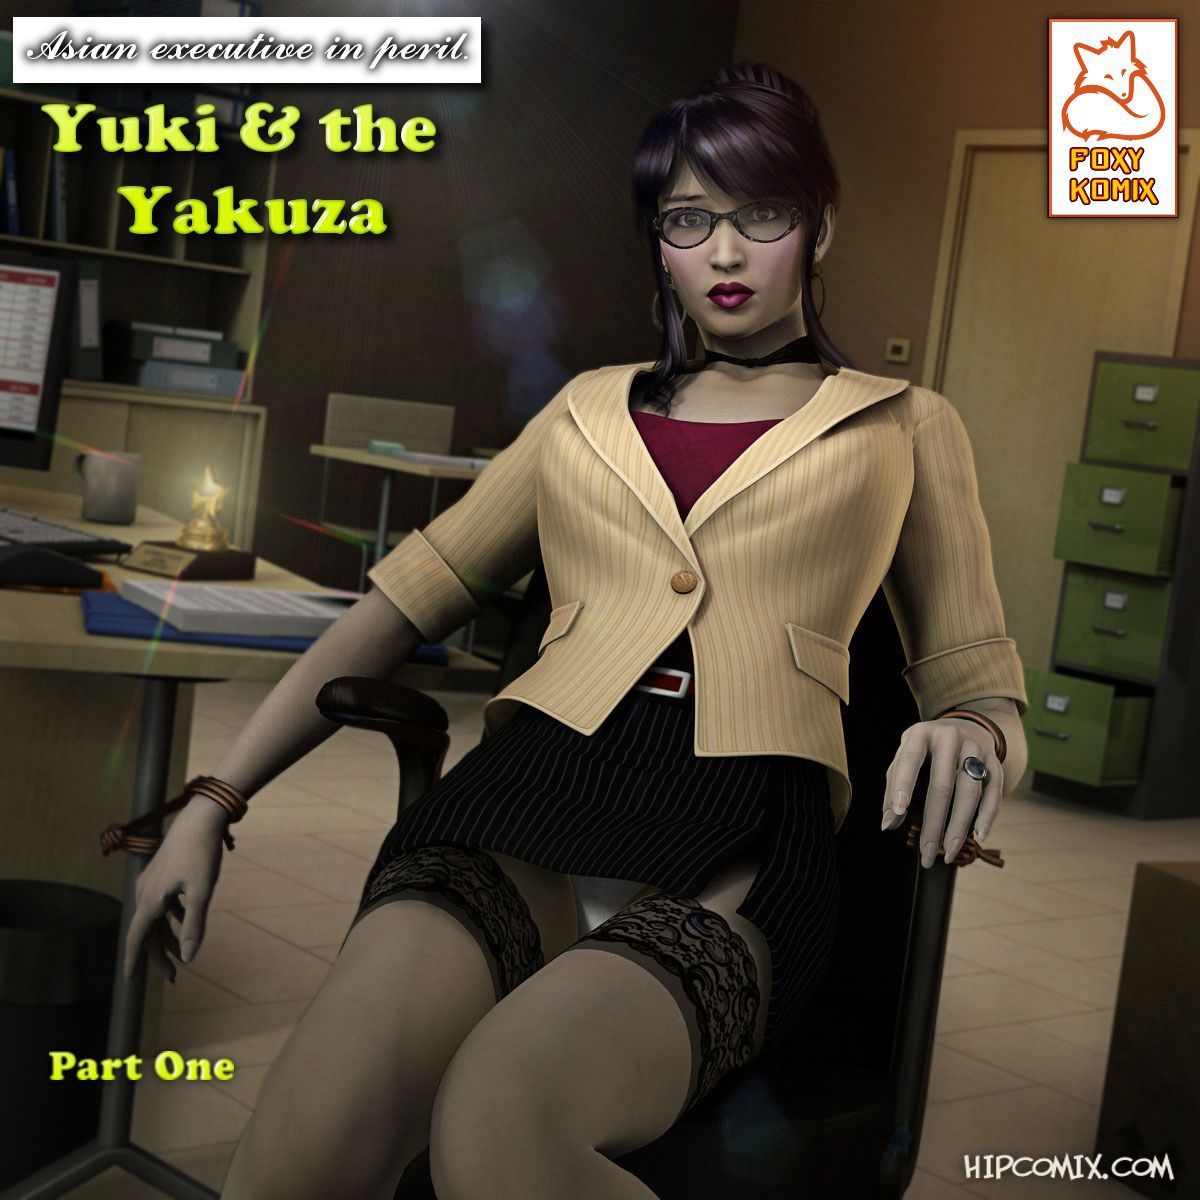 [foxy komix] Yuki und die yakuza 1 2